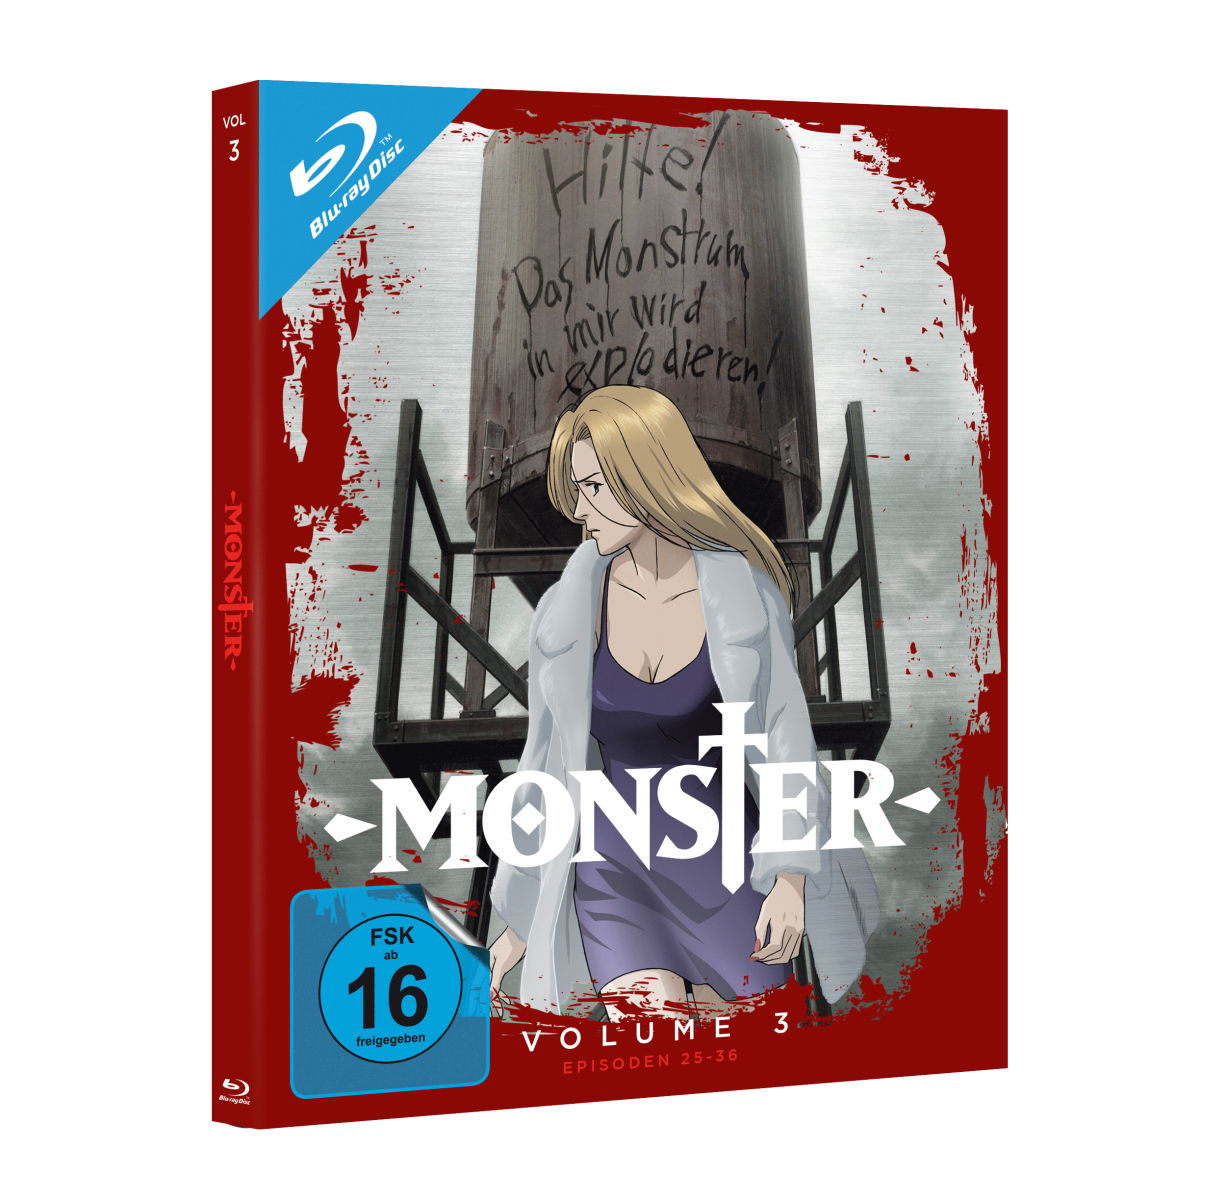 MONSTER - Volume 3: Episode 25-36 im Steelbook [Blu-ray] Image 2